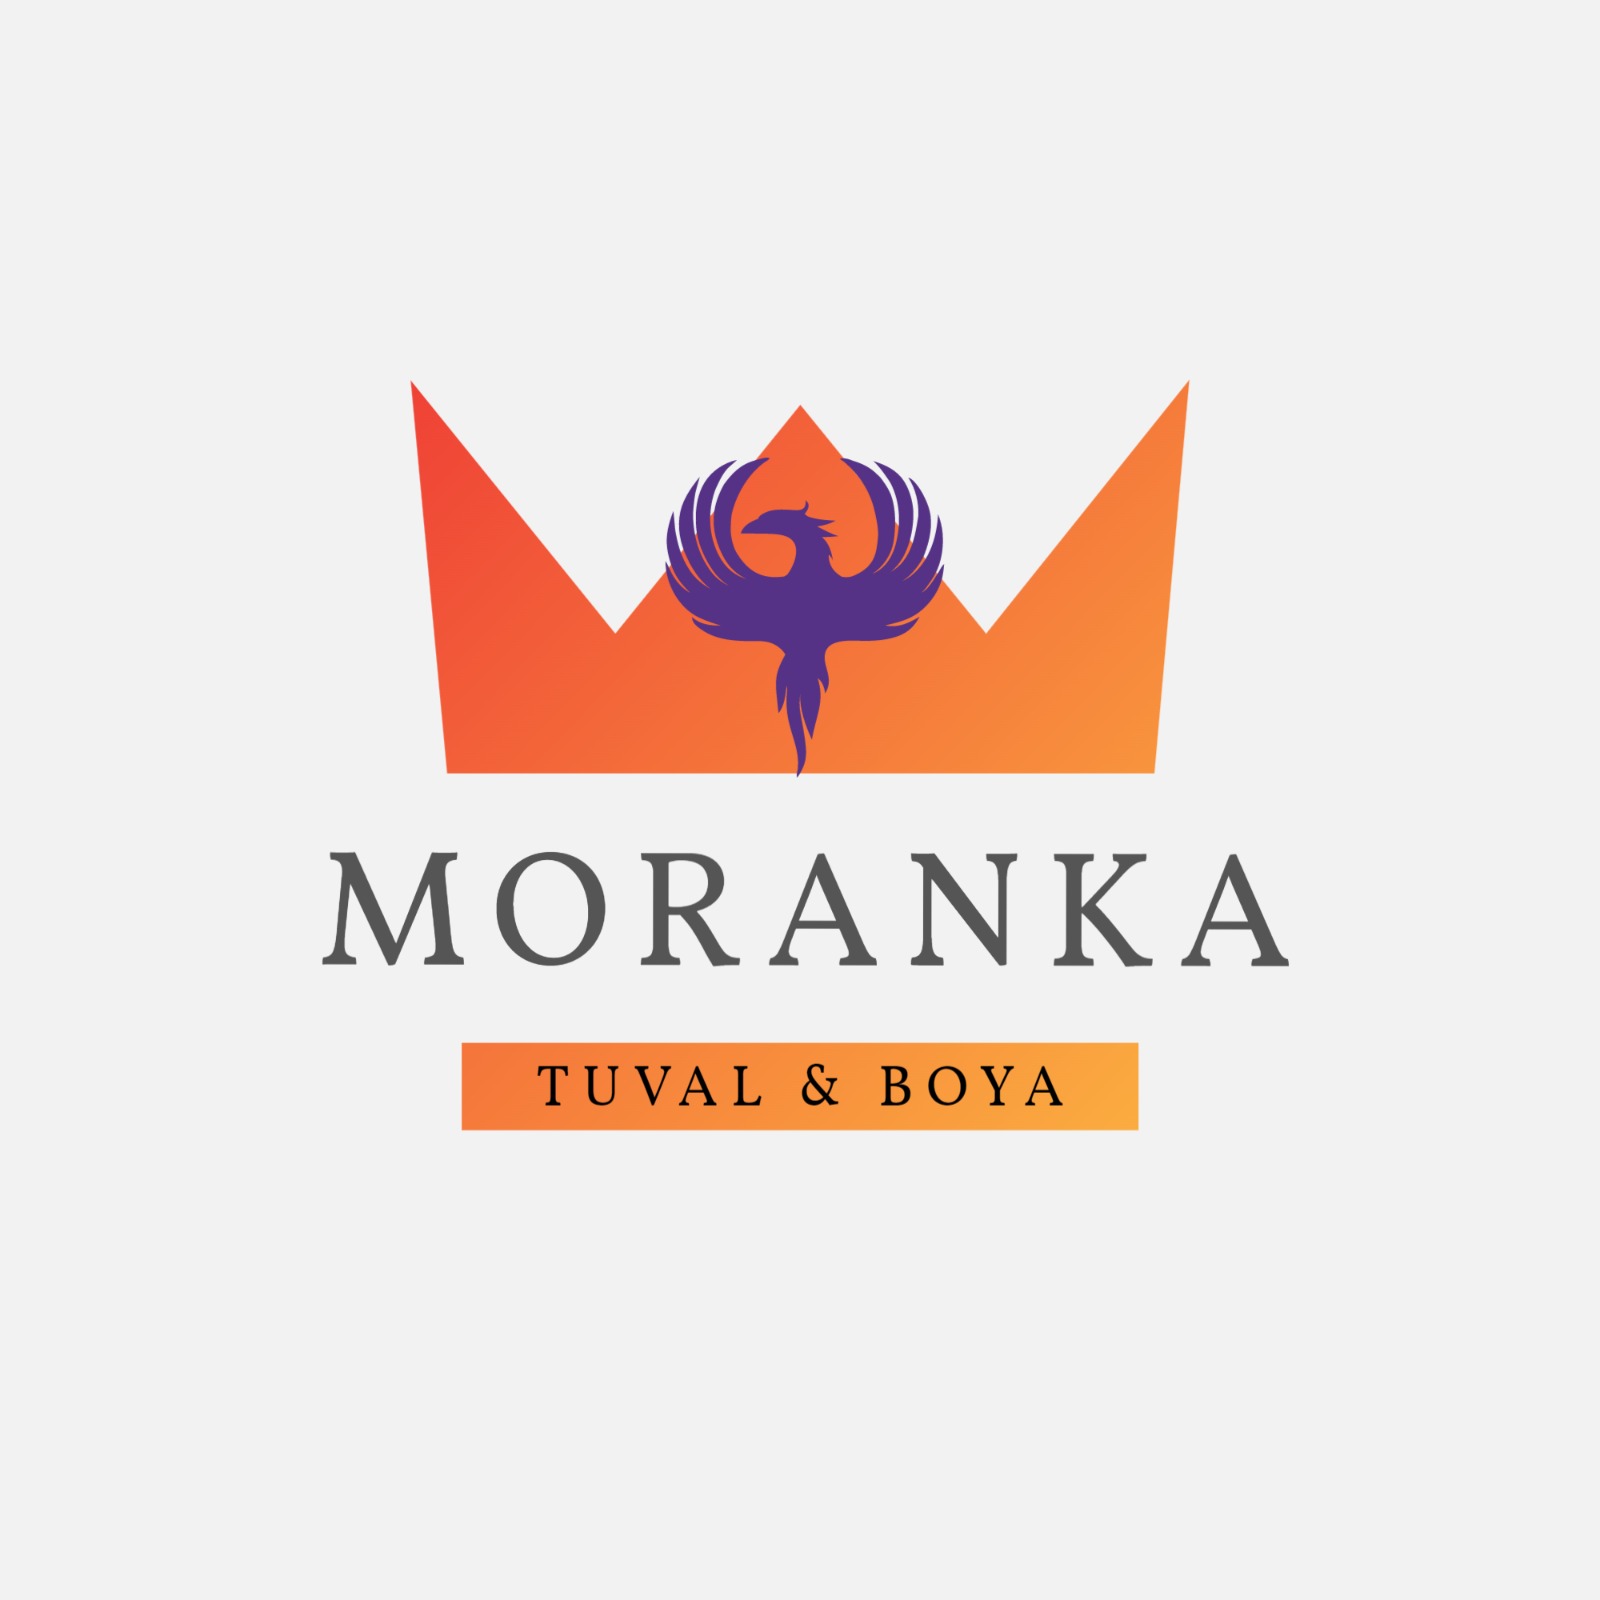 MorAnkaTuval&Boya